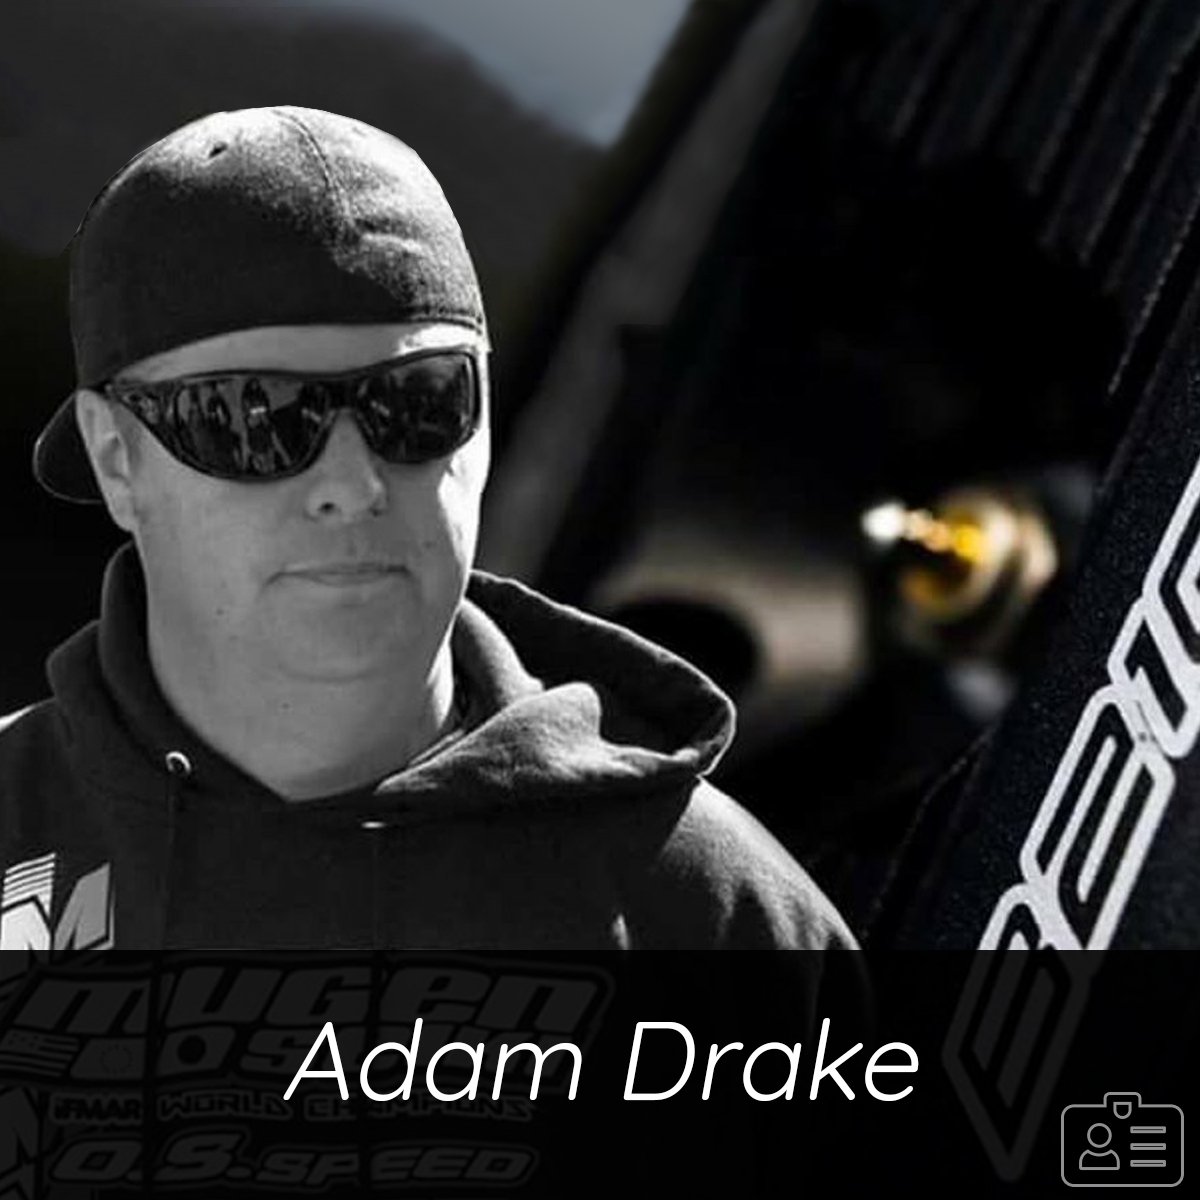 Adam Drake - RC Racer - ProTek Pro Team